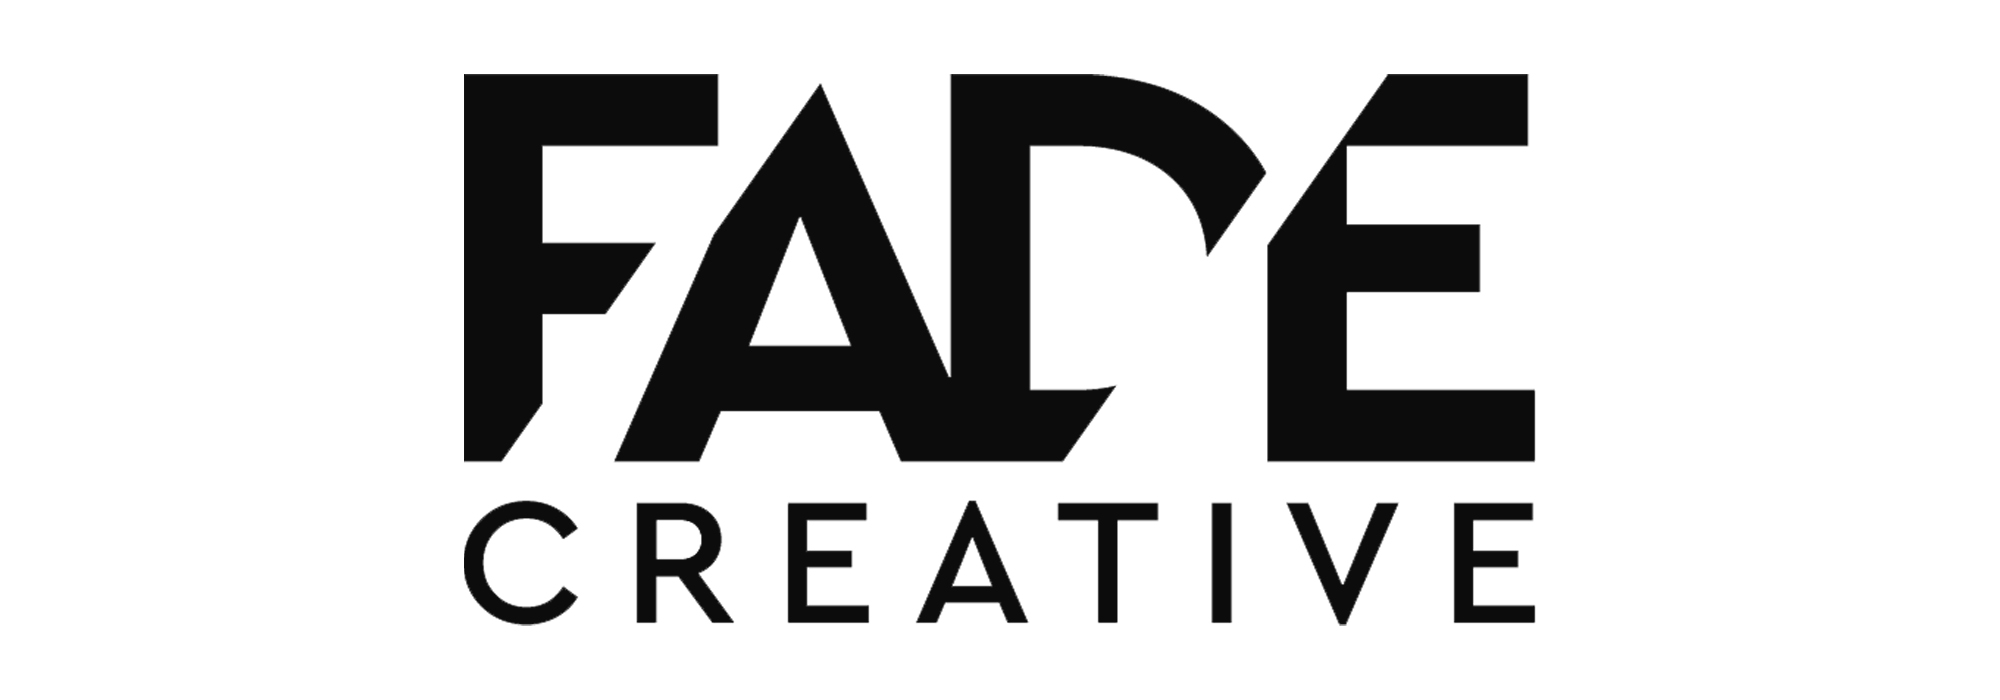 Fade Creative